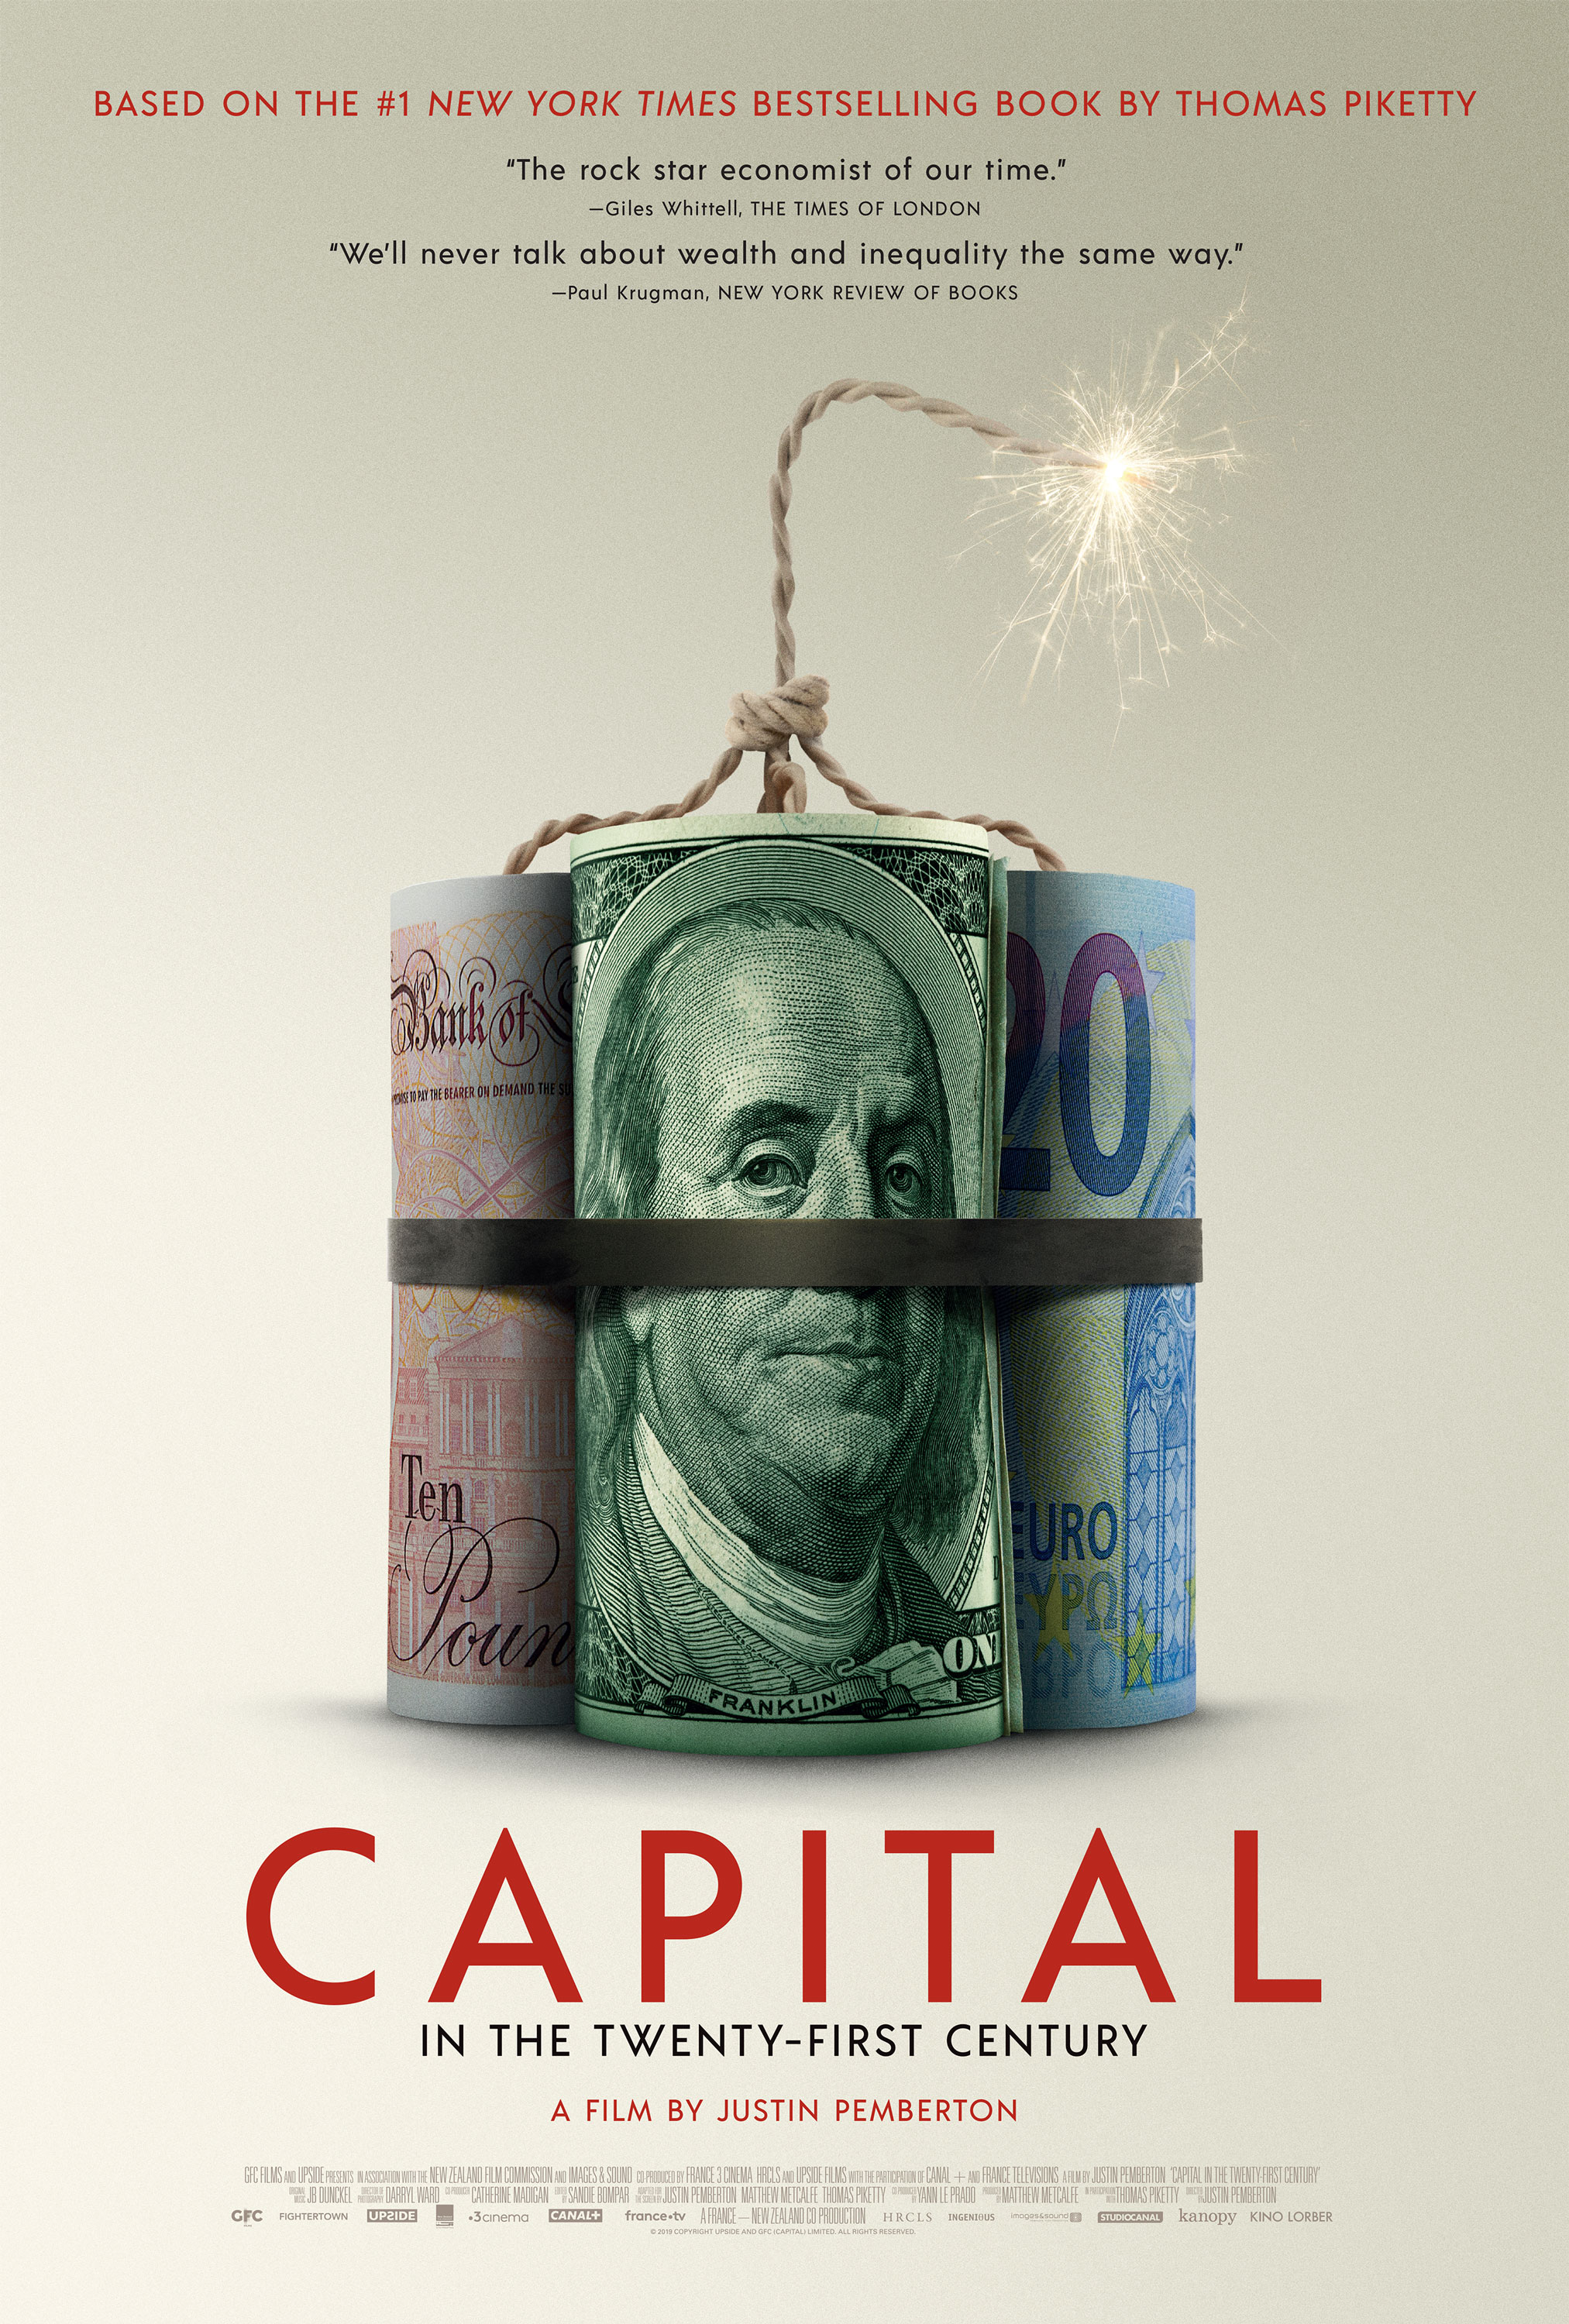 Nonton film Capital in the Twenty-First Century layarkaca21 indoxx1 ganool online streaming terbaru